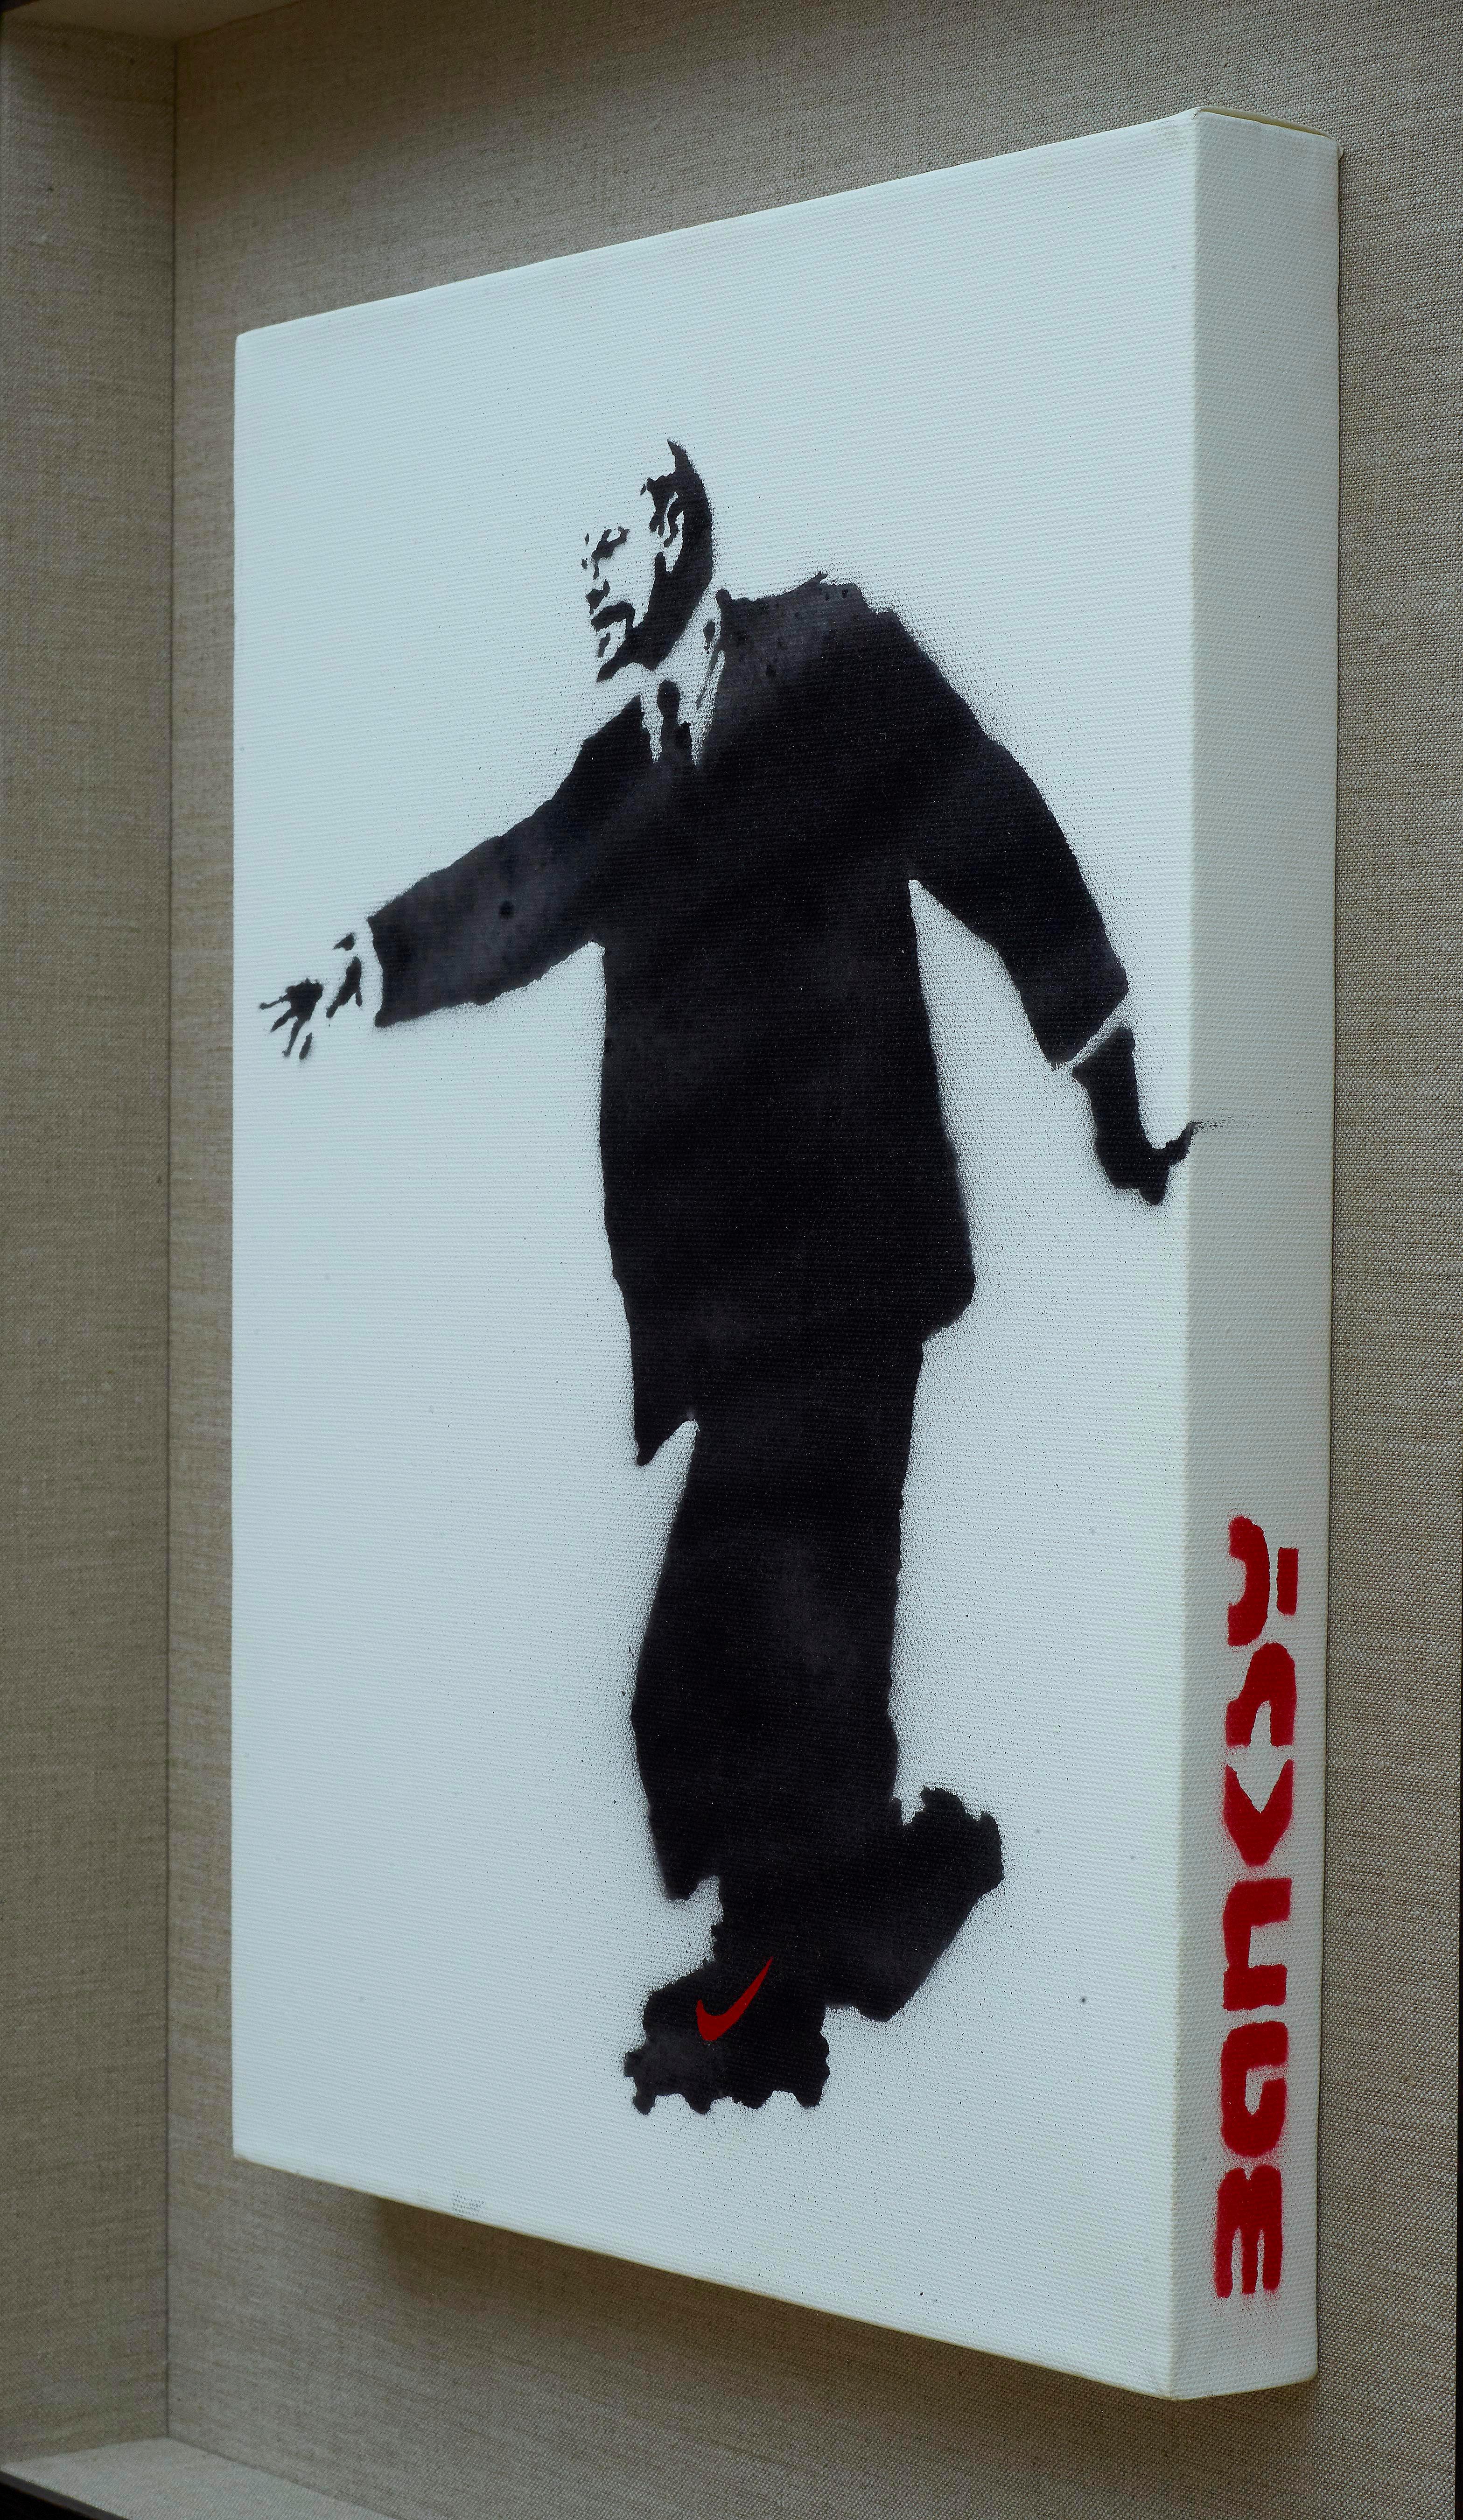 Banksy
Lenin on Roller Skates, 2003
spray paint on canvas
40 x 30 cm
Edition of 25